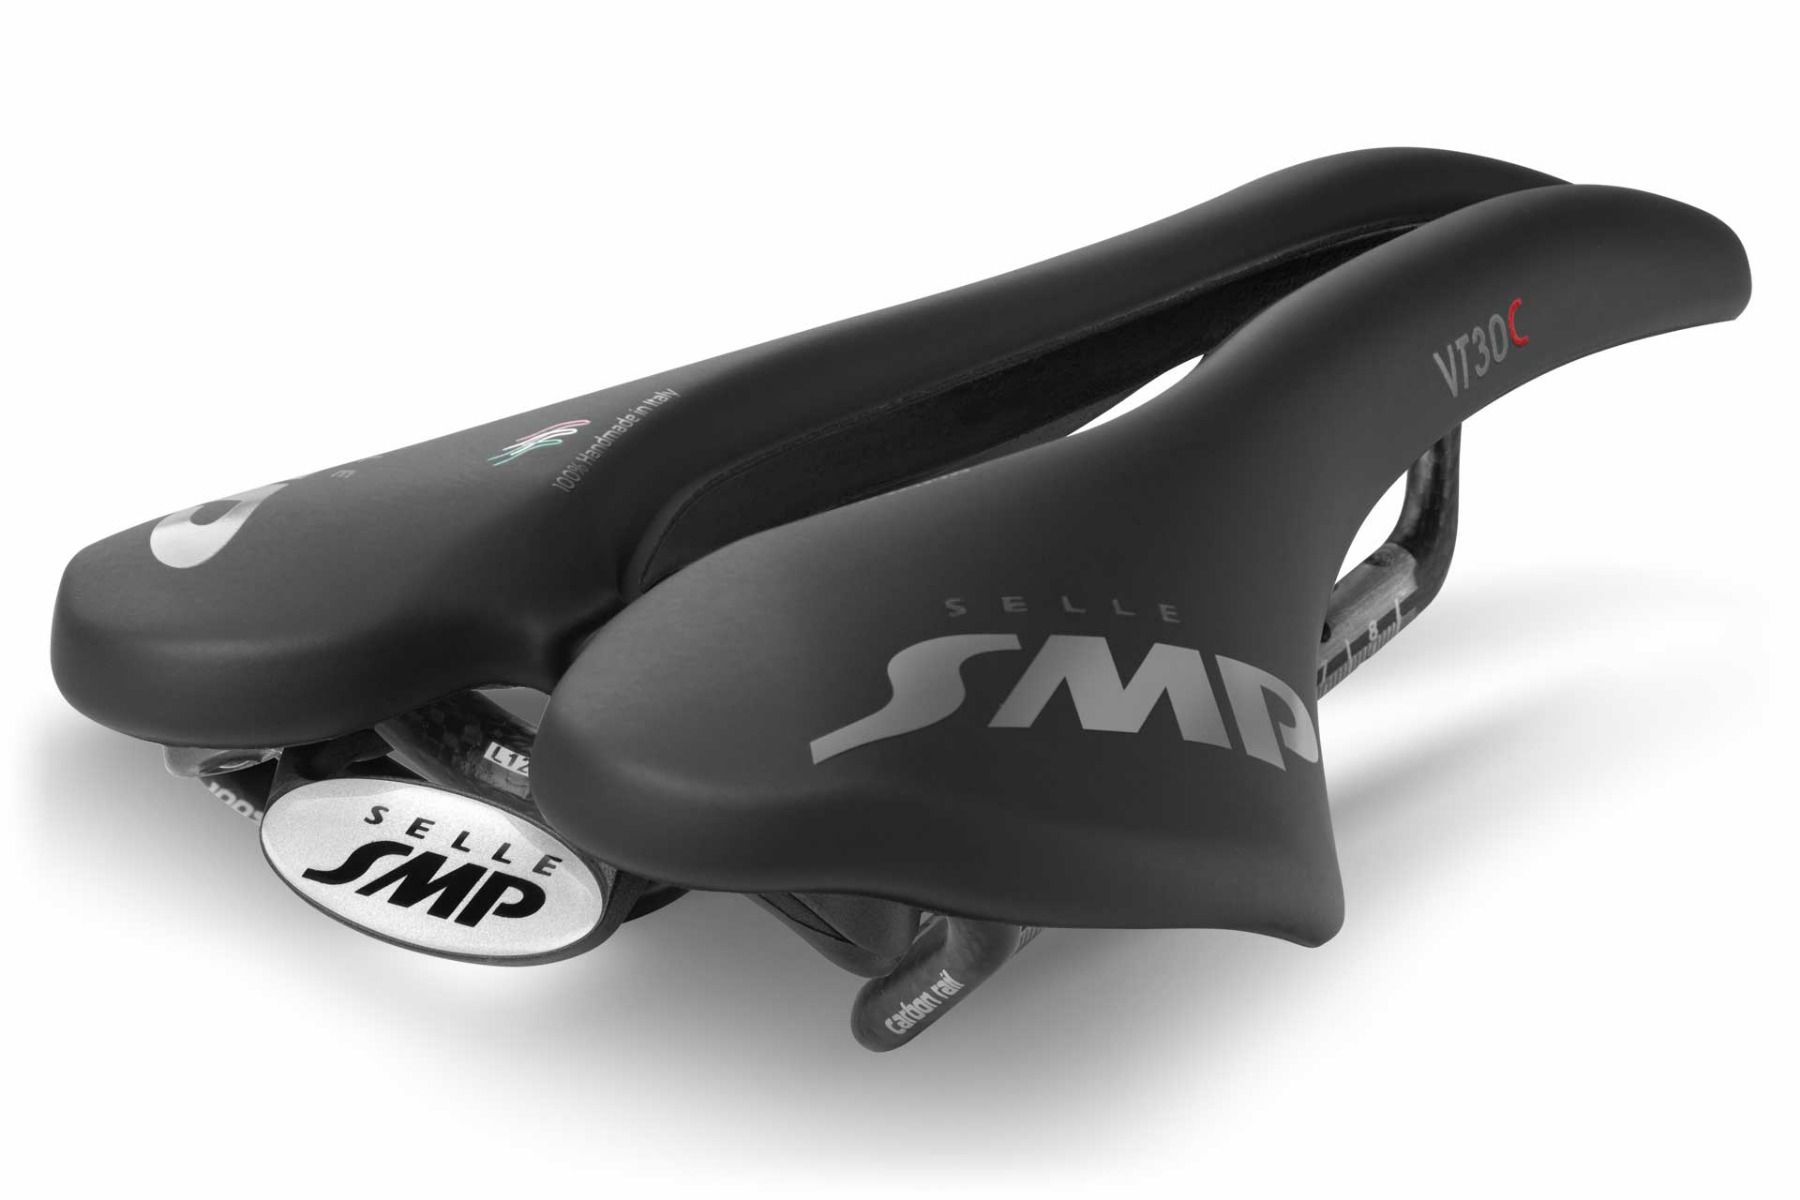 Picture of Selle SMP VT30C Carbon Saddle - black